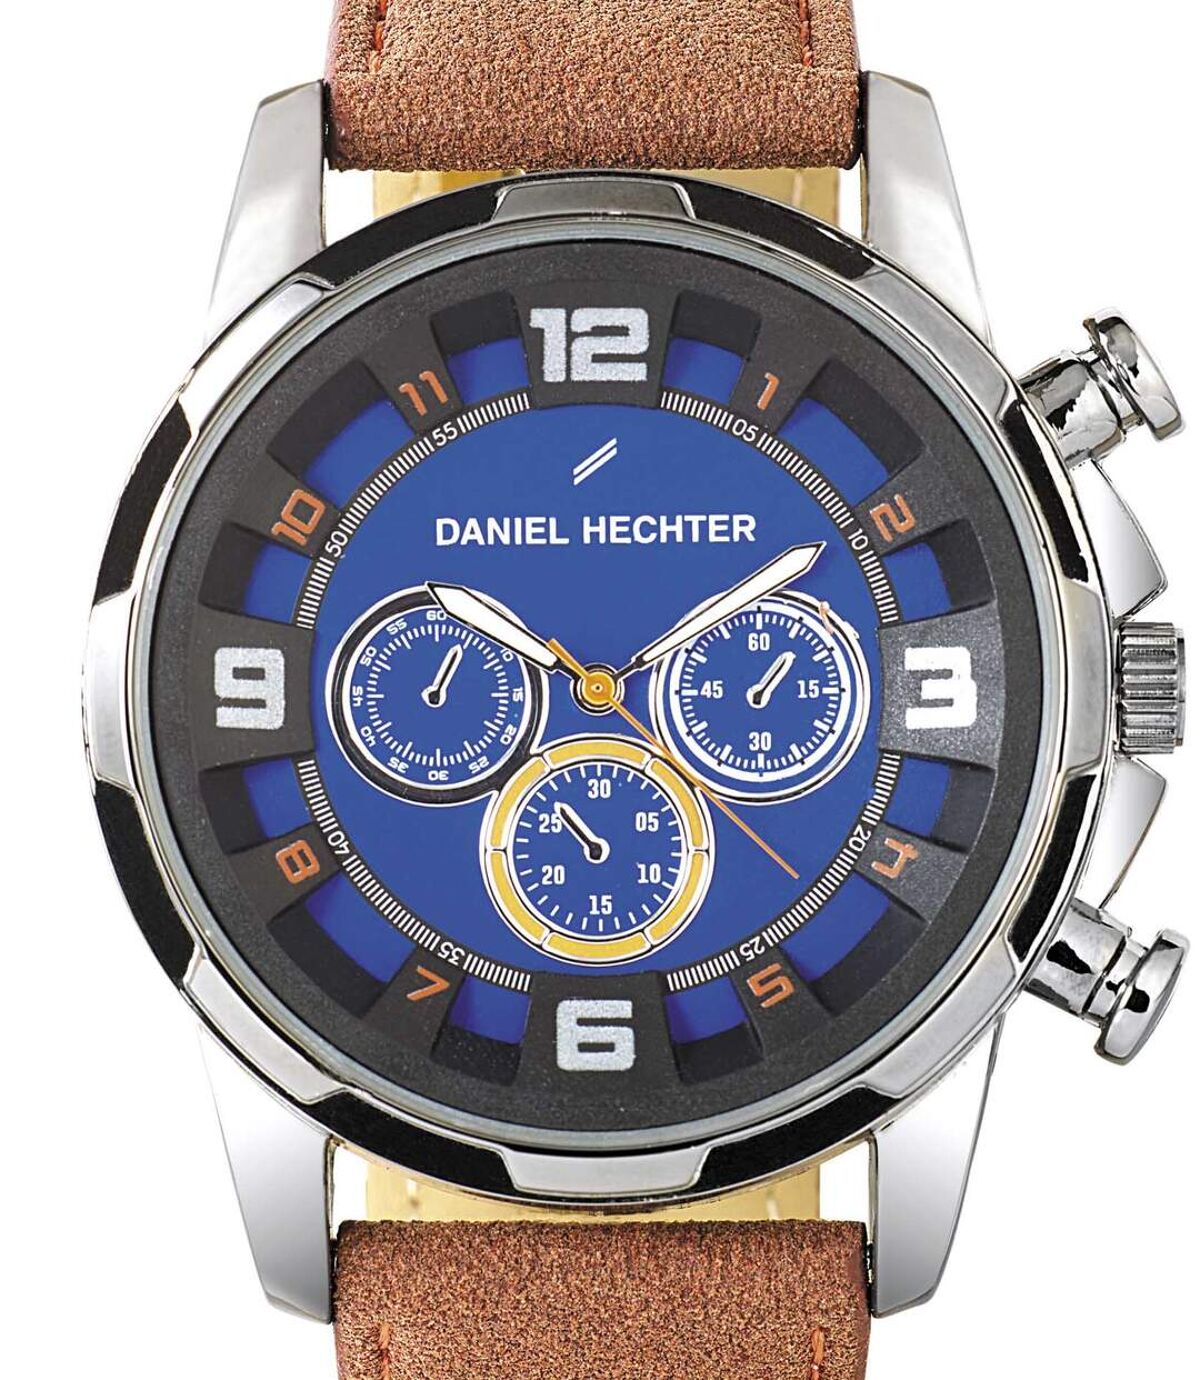 Настроить часы атлас. Часы Daniel Hechter Atlas for men. Daniel Hechter Atlas часы. Daniel Hechter часы мужские. Часы Daniel Hechter for Atlas for men watch.